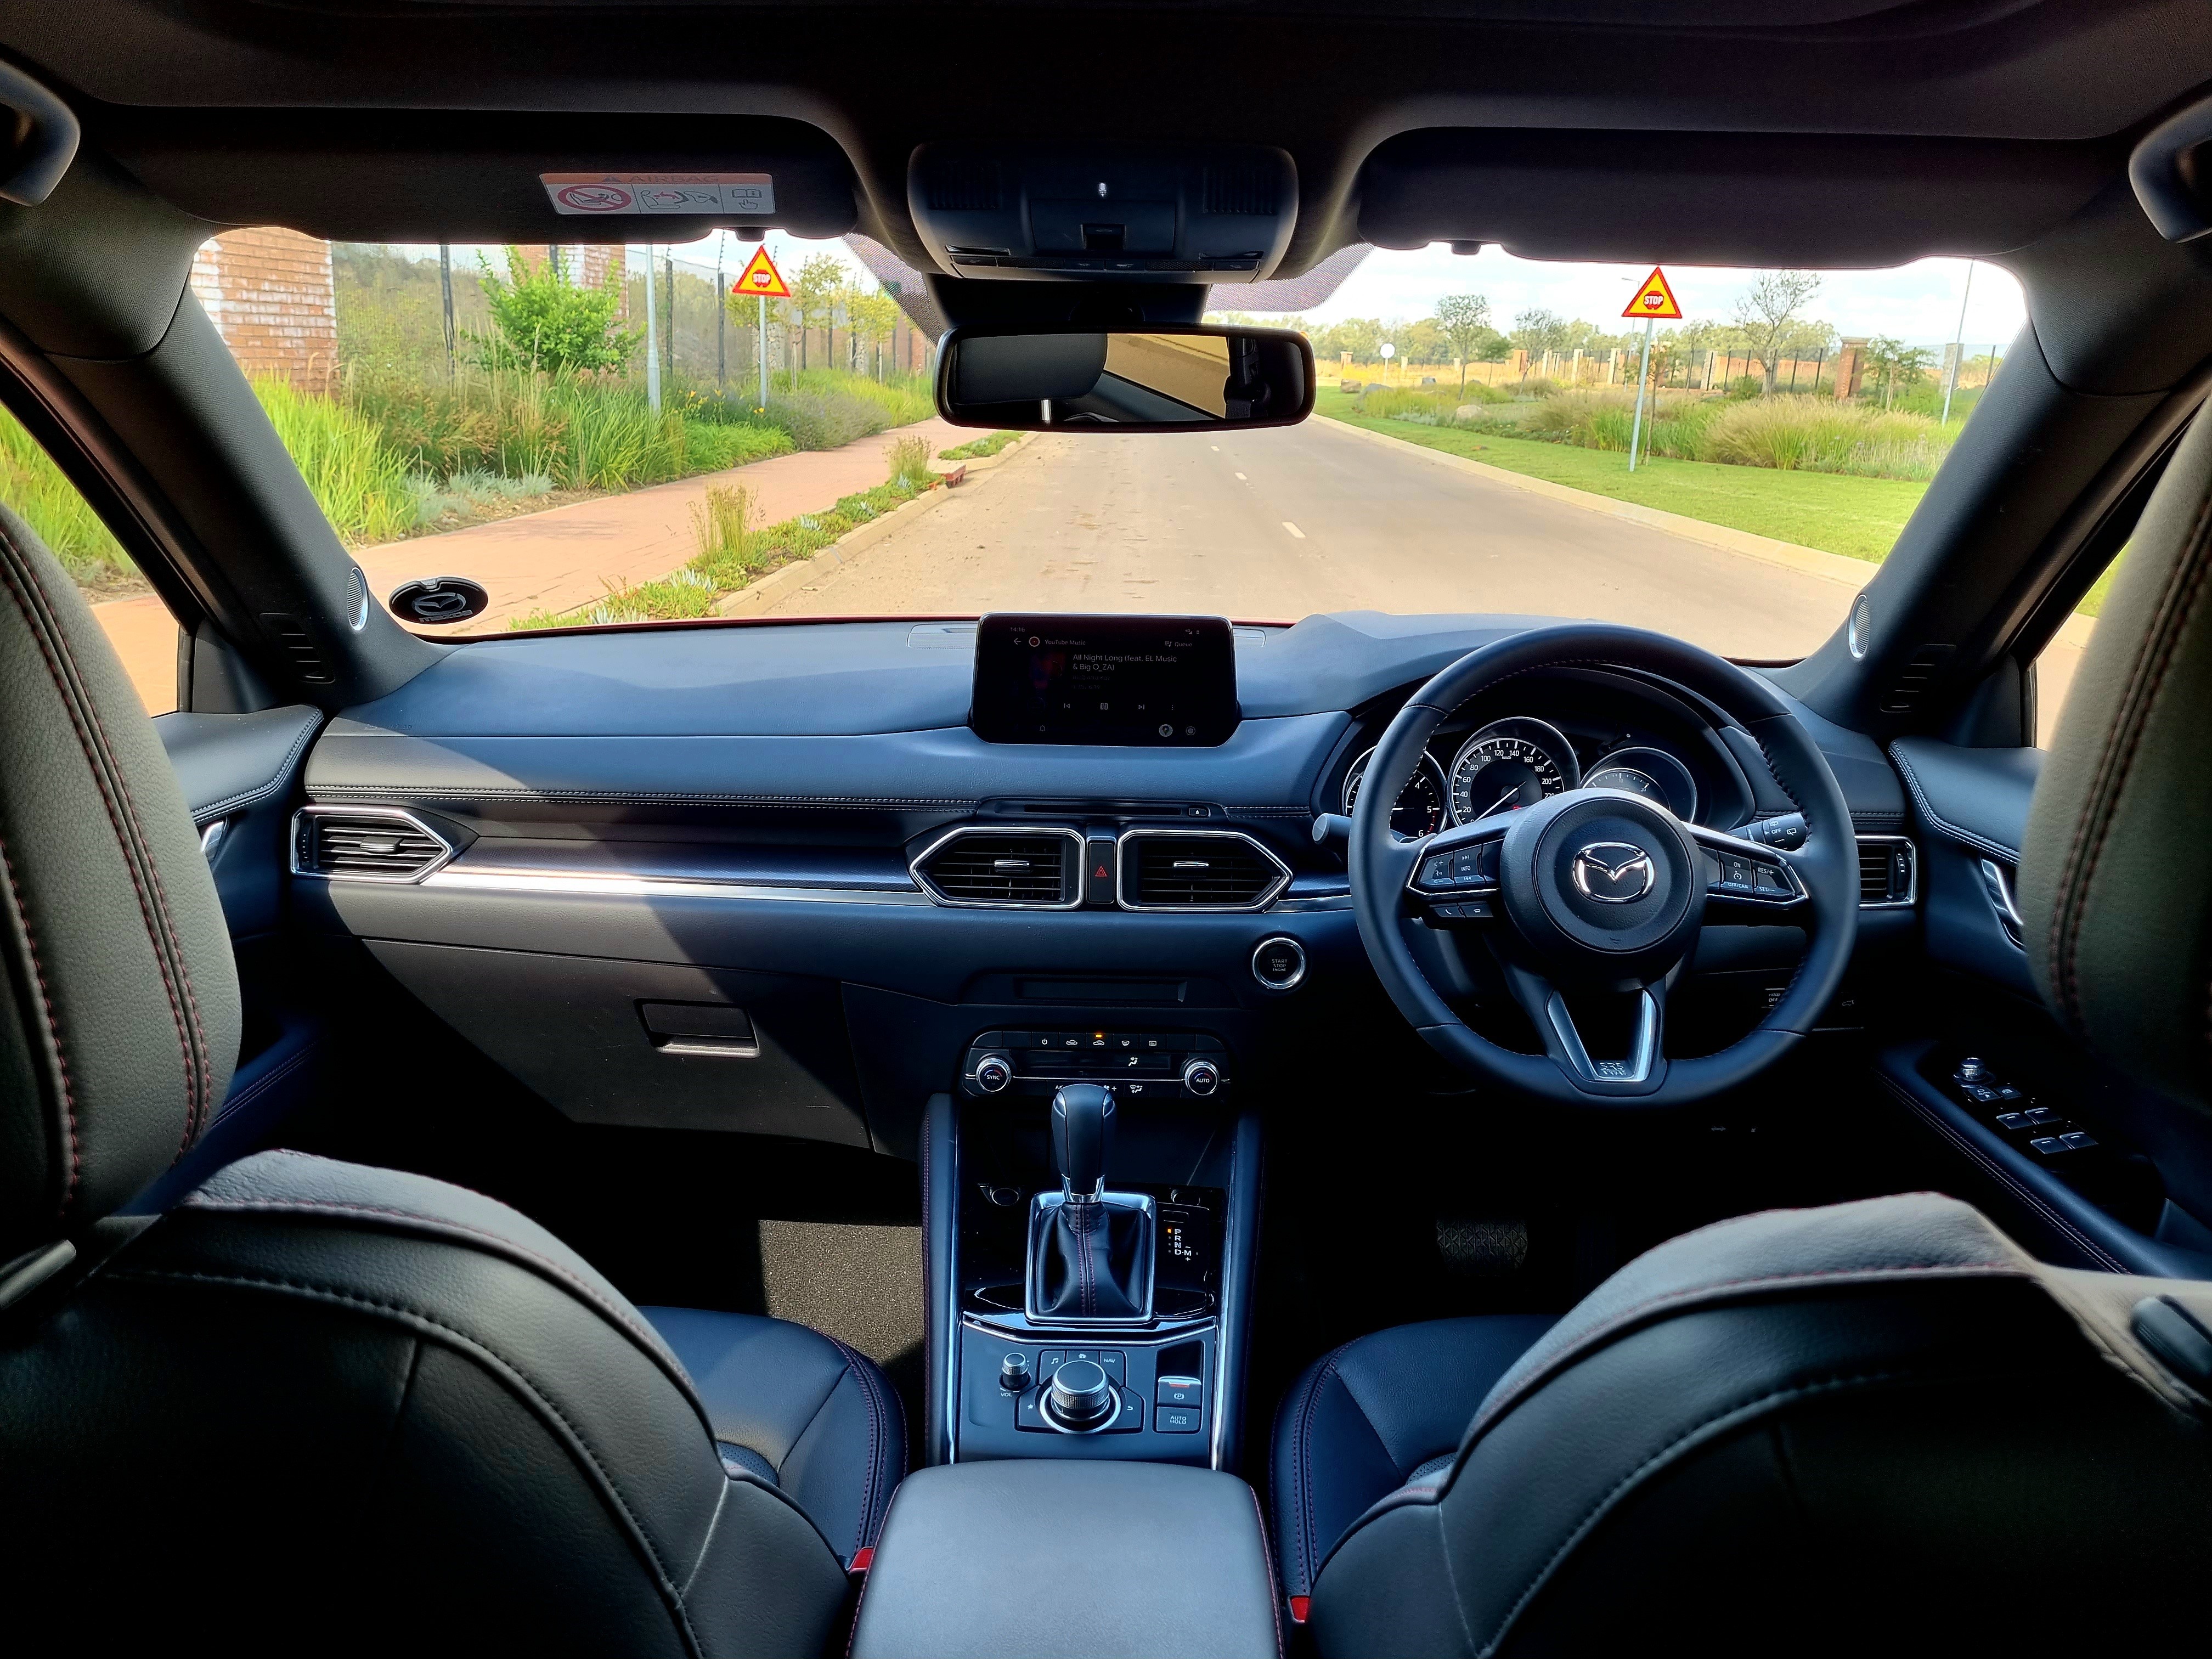 2018 Mazda CX-5 Review: Trailing Its Own Triumph